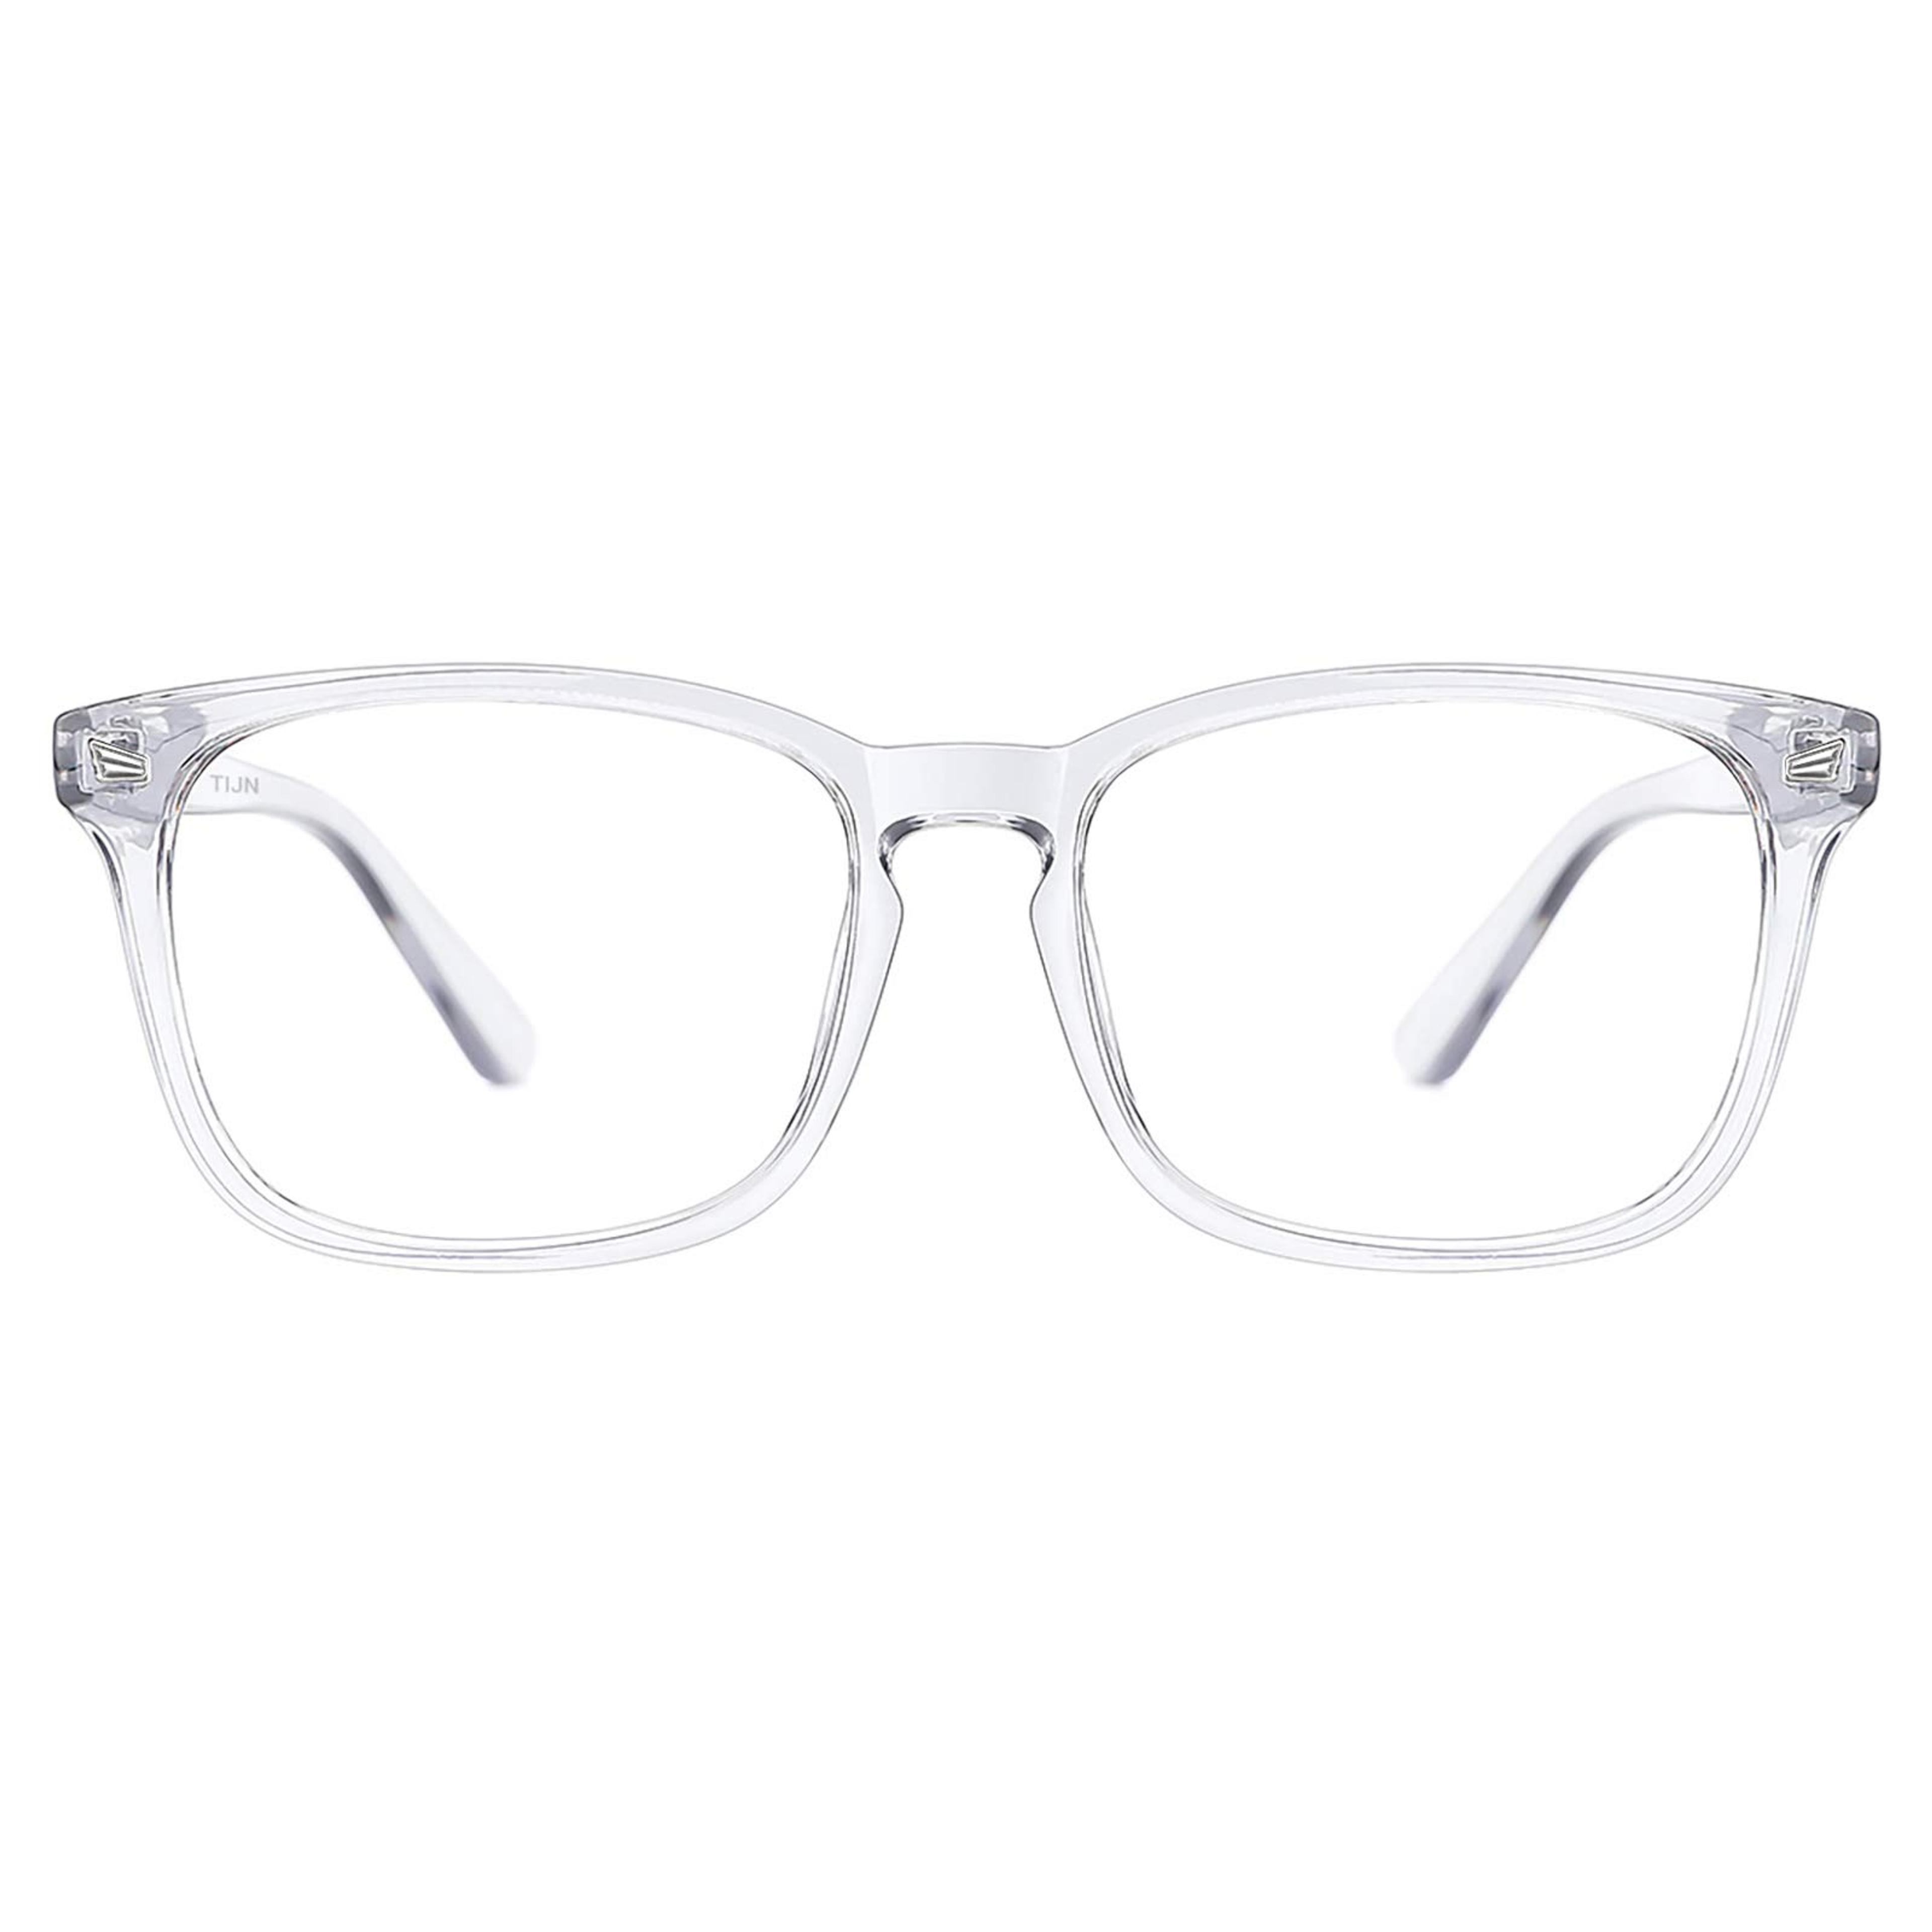 Amazon.com: TIJN Blue Light Blocking Glasses for Women Men Clear Frame Square Nerd Eyeglasses Anti Blue Ray Computer Screen Glasses(Transparent) : Health & Household